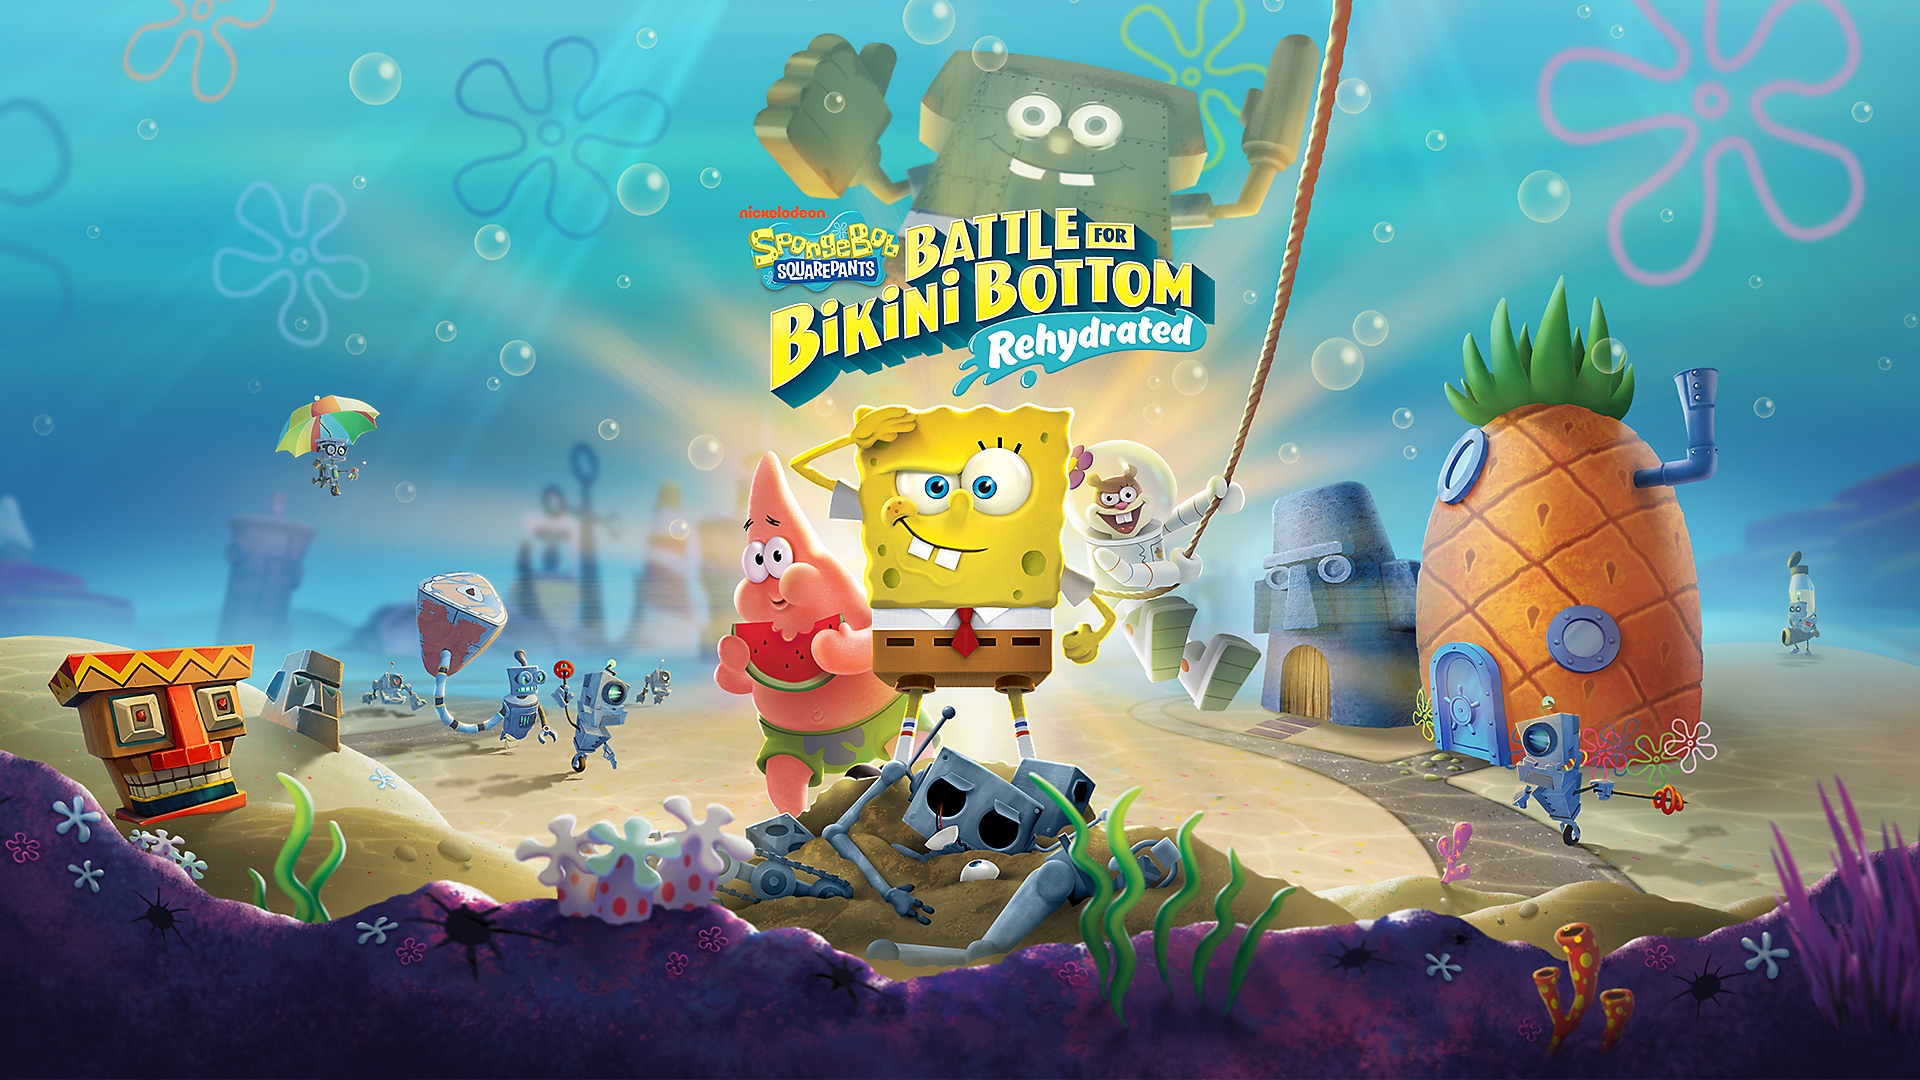 Bob Esponja saluda mientras Patricio come una piña en Fondo de Bikini para SpongeBob SquarePants: Battle For Bikini Bottom Rehydrated en PS4